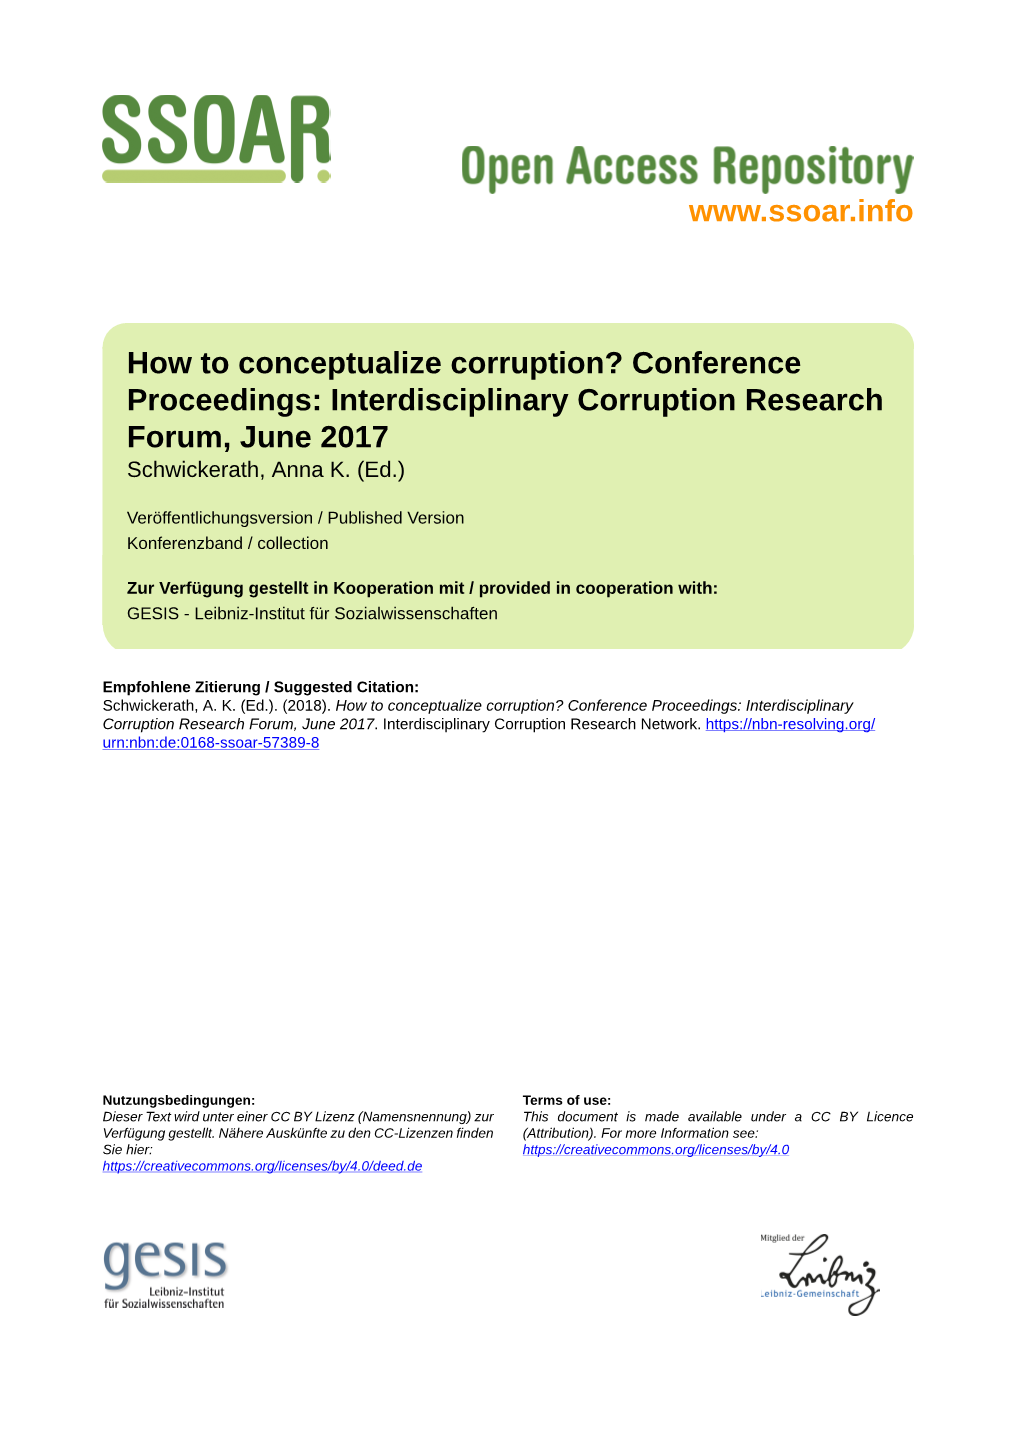 How to Conceptualize Corruption? Conference Proceedings: Interdisciplinary Corruption Research Forum, June 2017 Schwickerath, Anna K